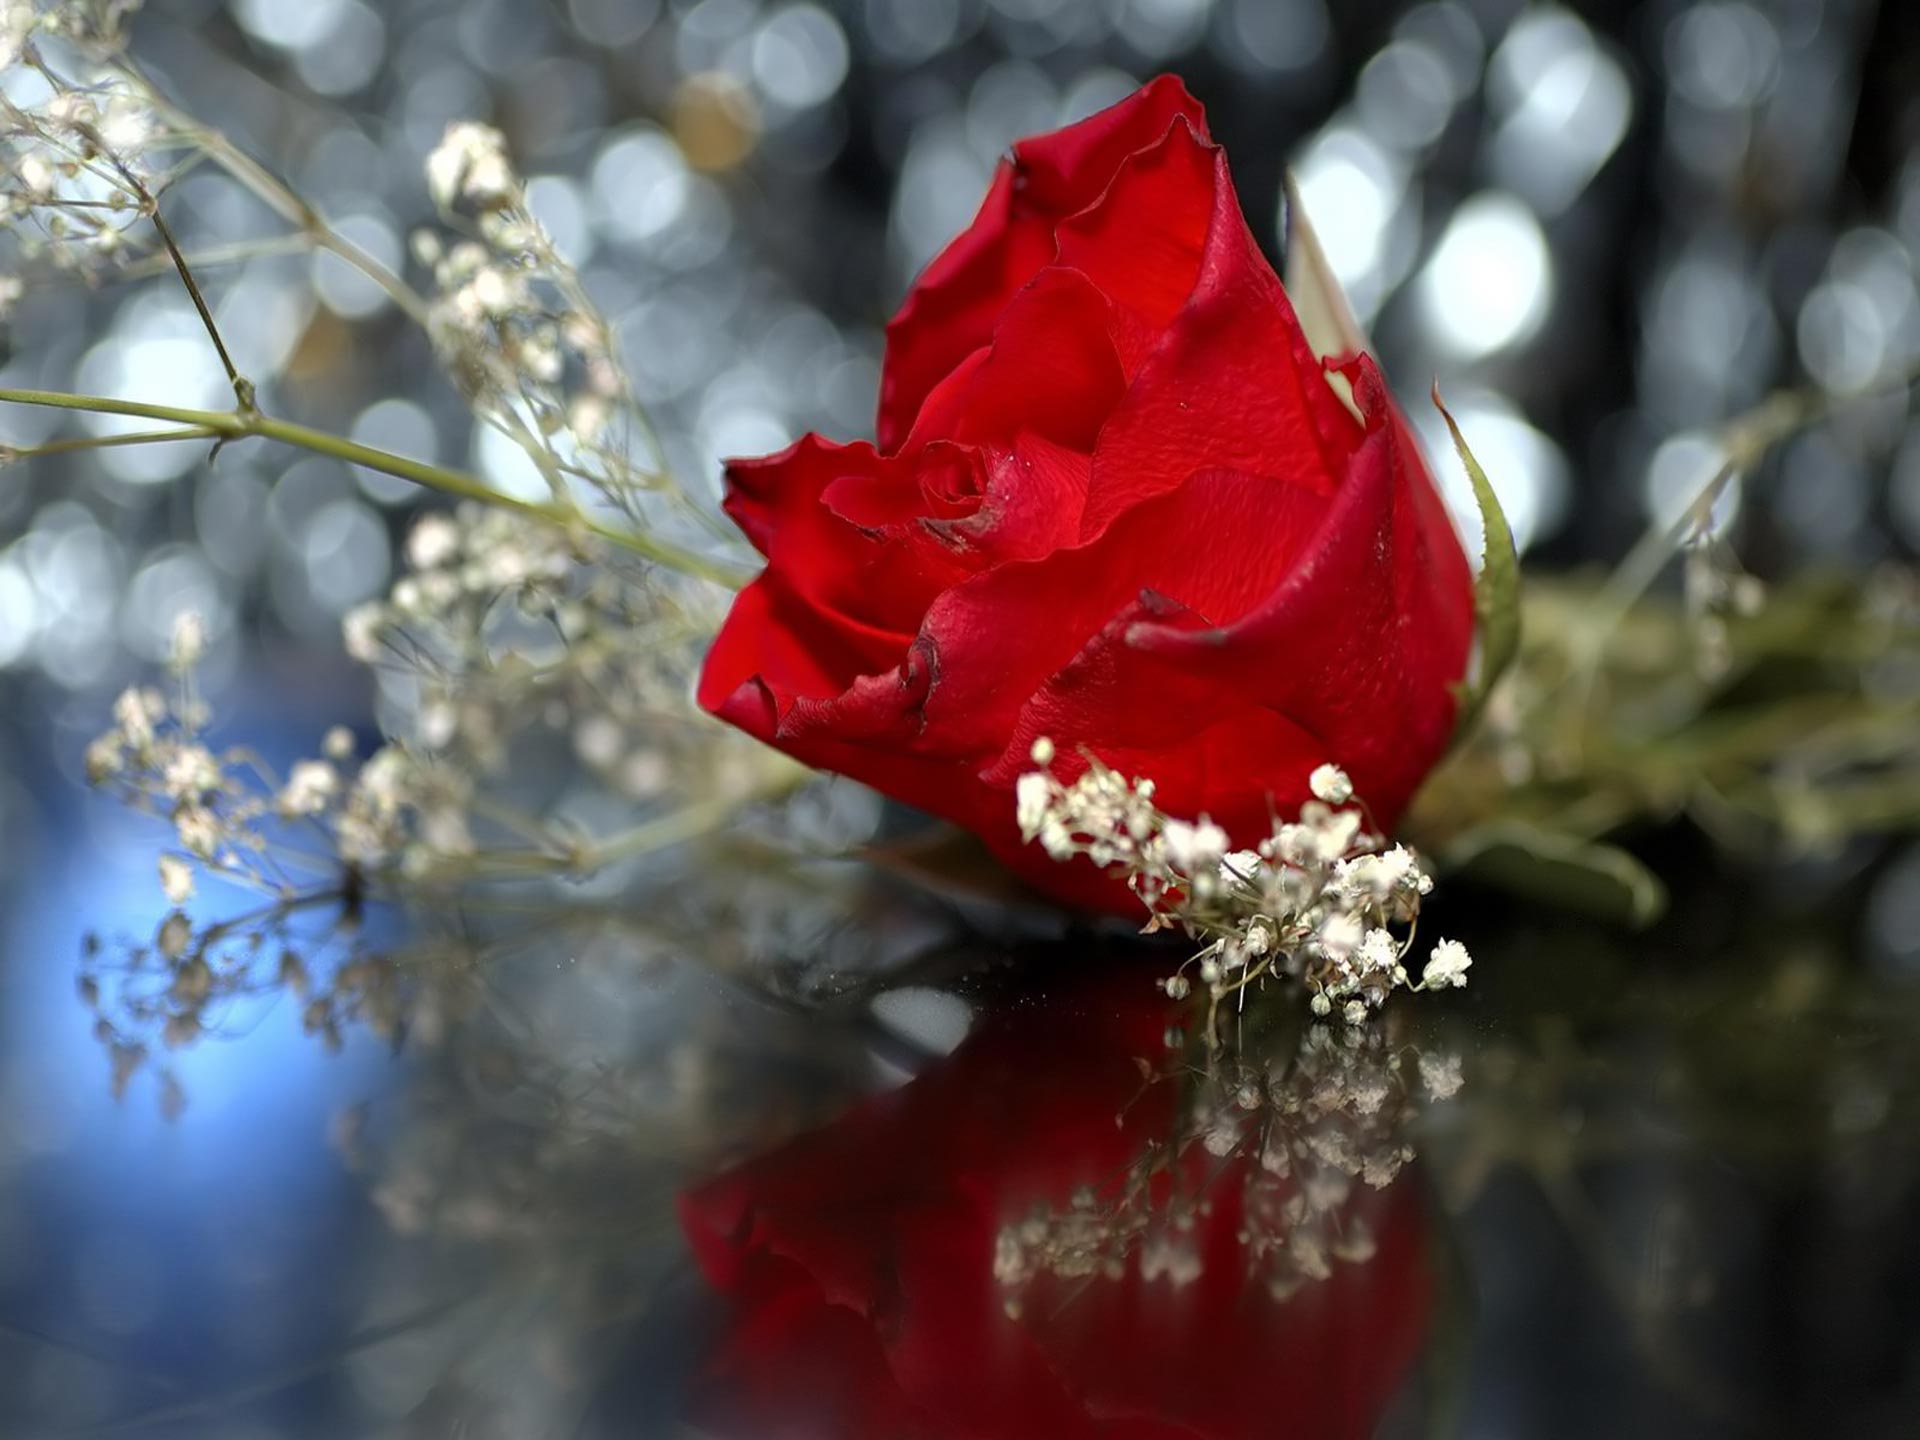 Desktop Wallpaper · Gallery · Nature · Wedding red rose | Free ...